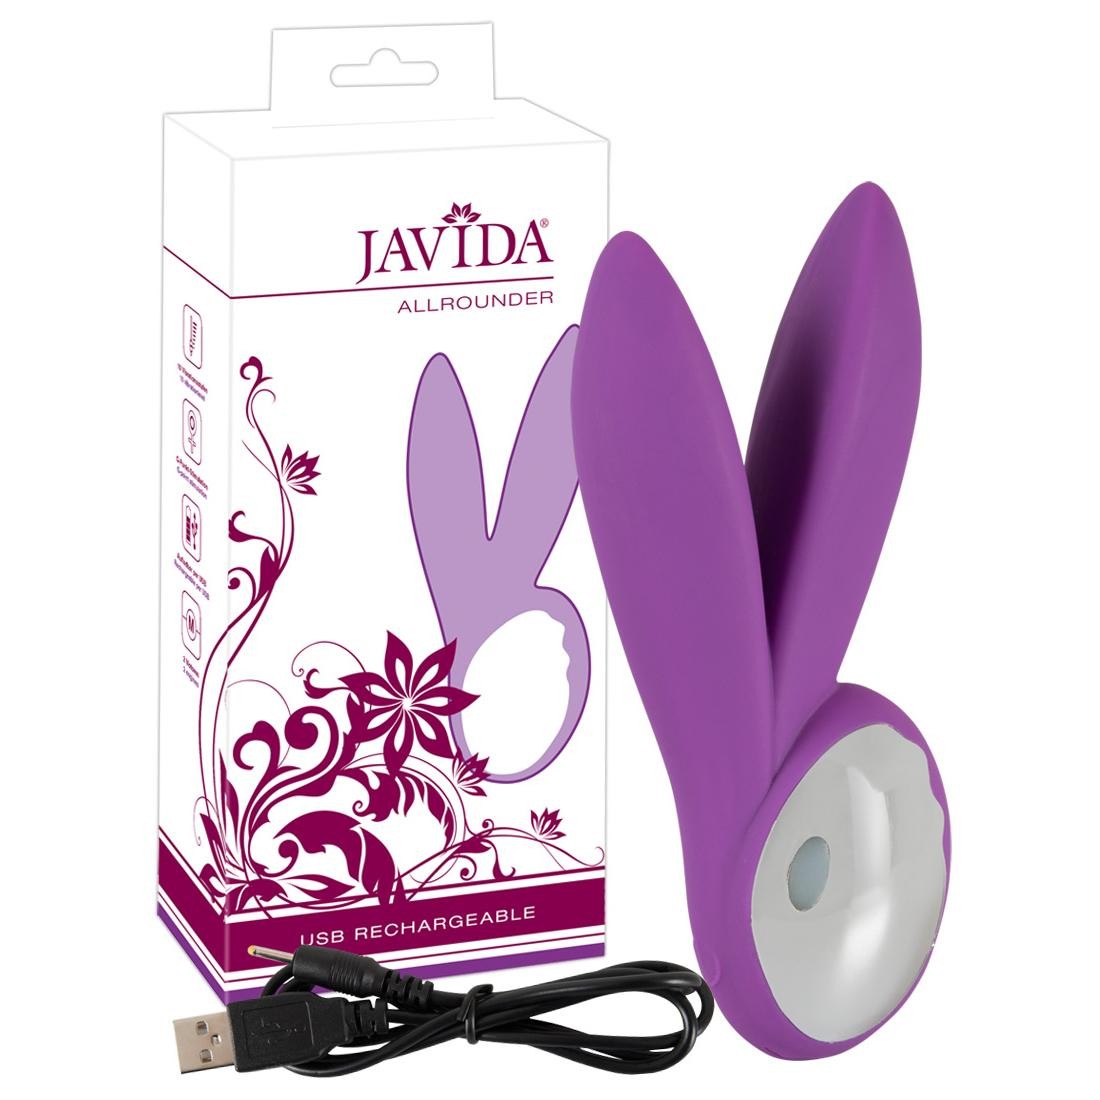  JAVIDA  -  Javida  Allrounder  USB  recharge  -  Vibrator 